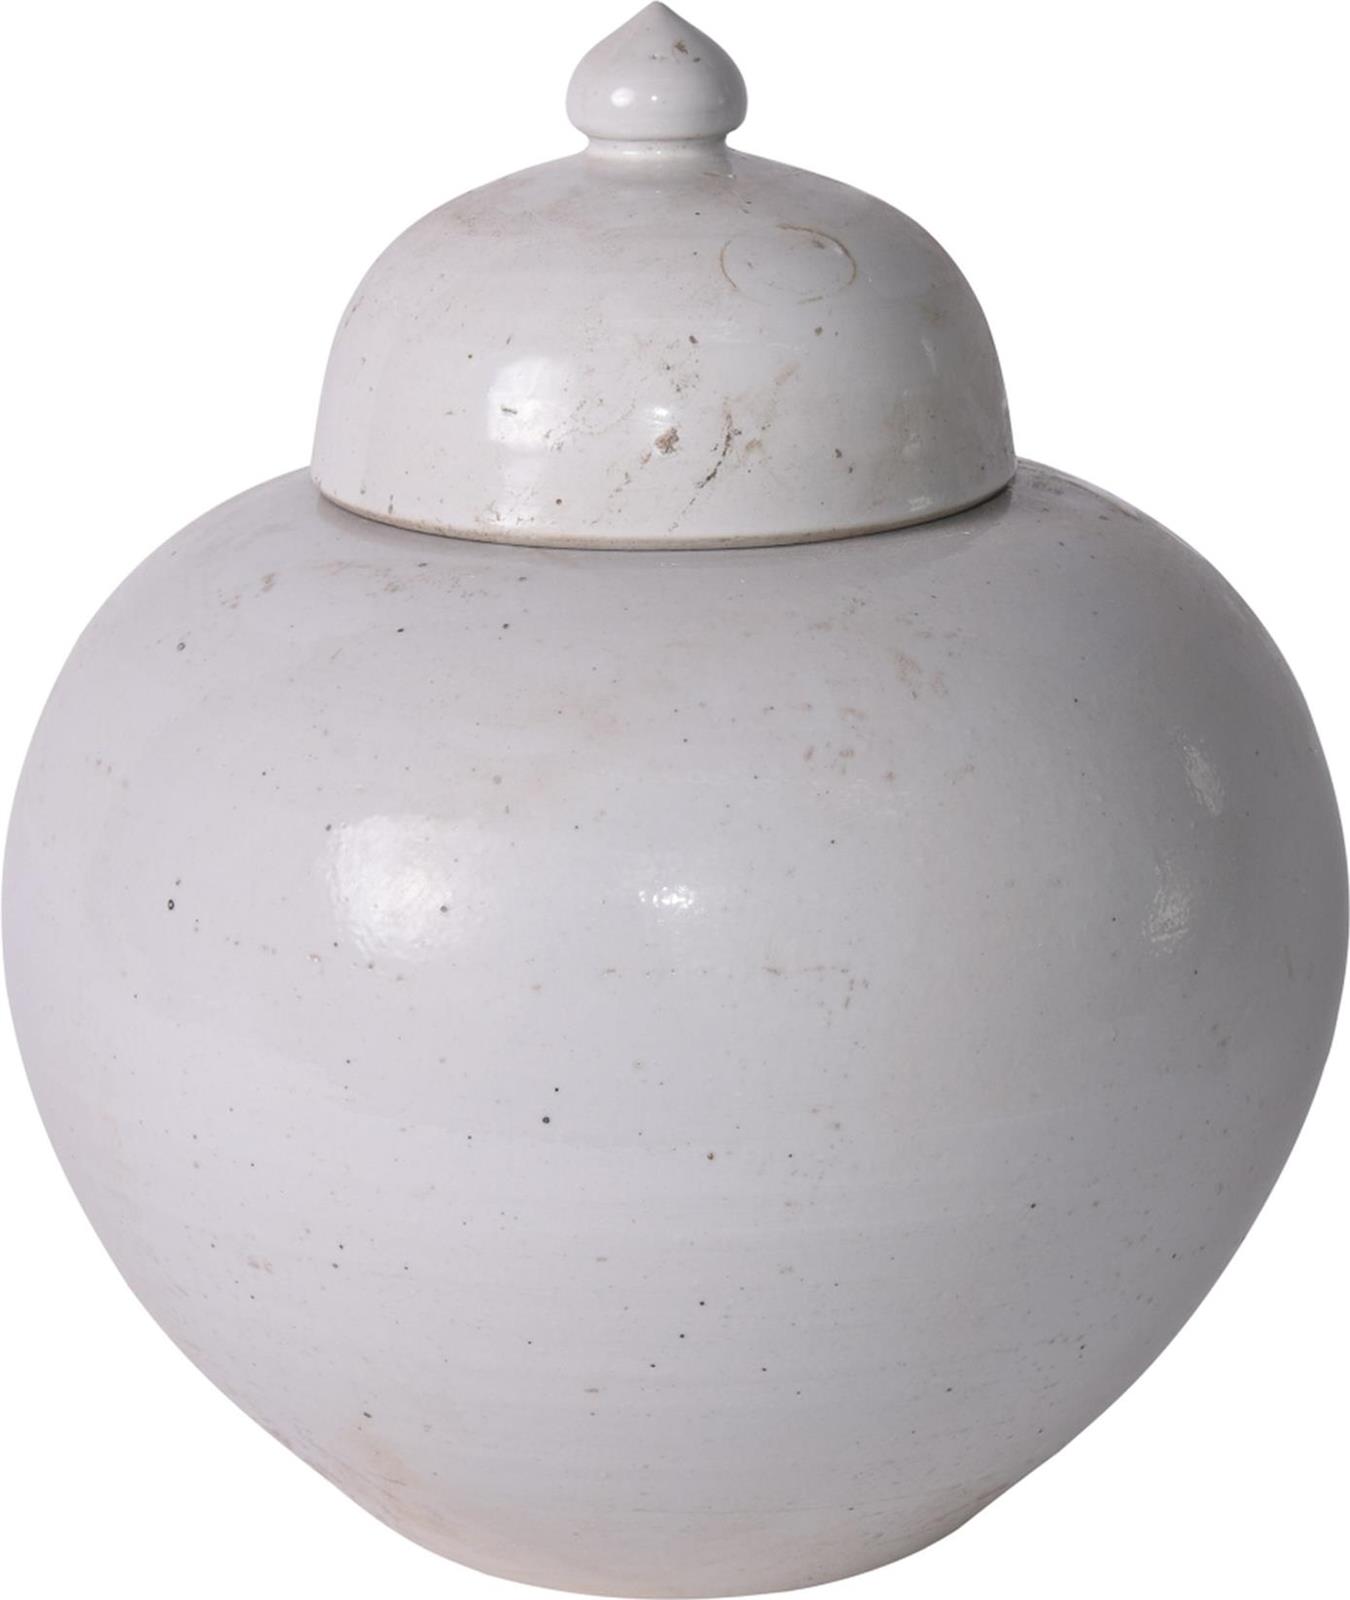 Jar Vase BUSAN Lidded White Colors May Vary Variable Ceramic Handmade-Image 2